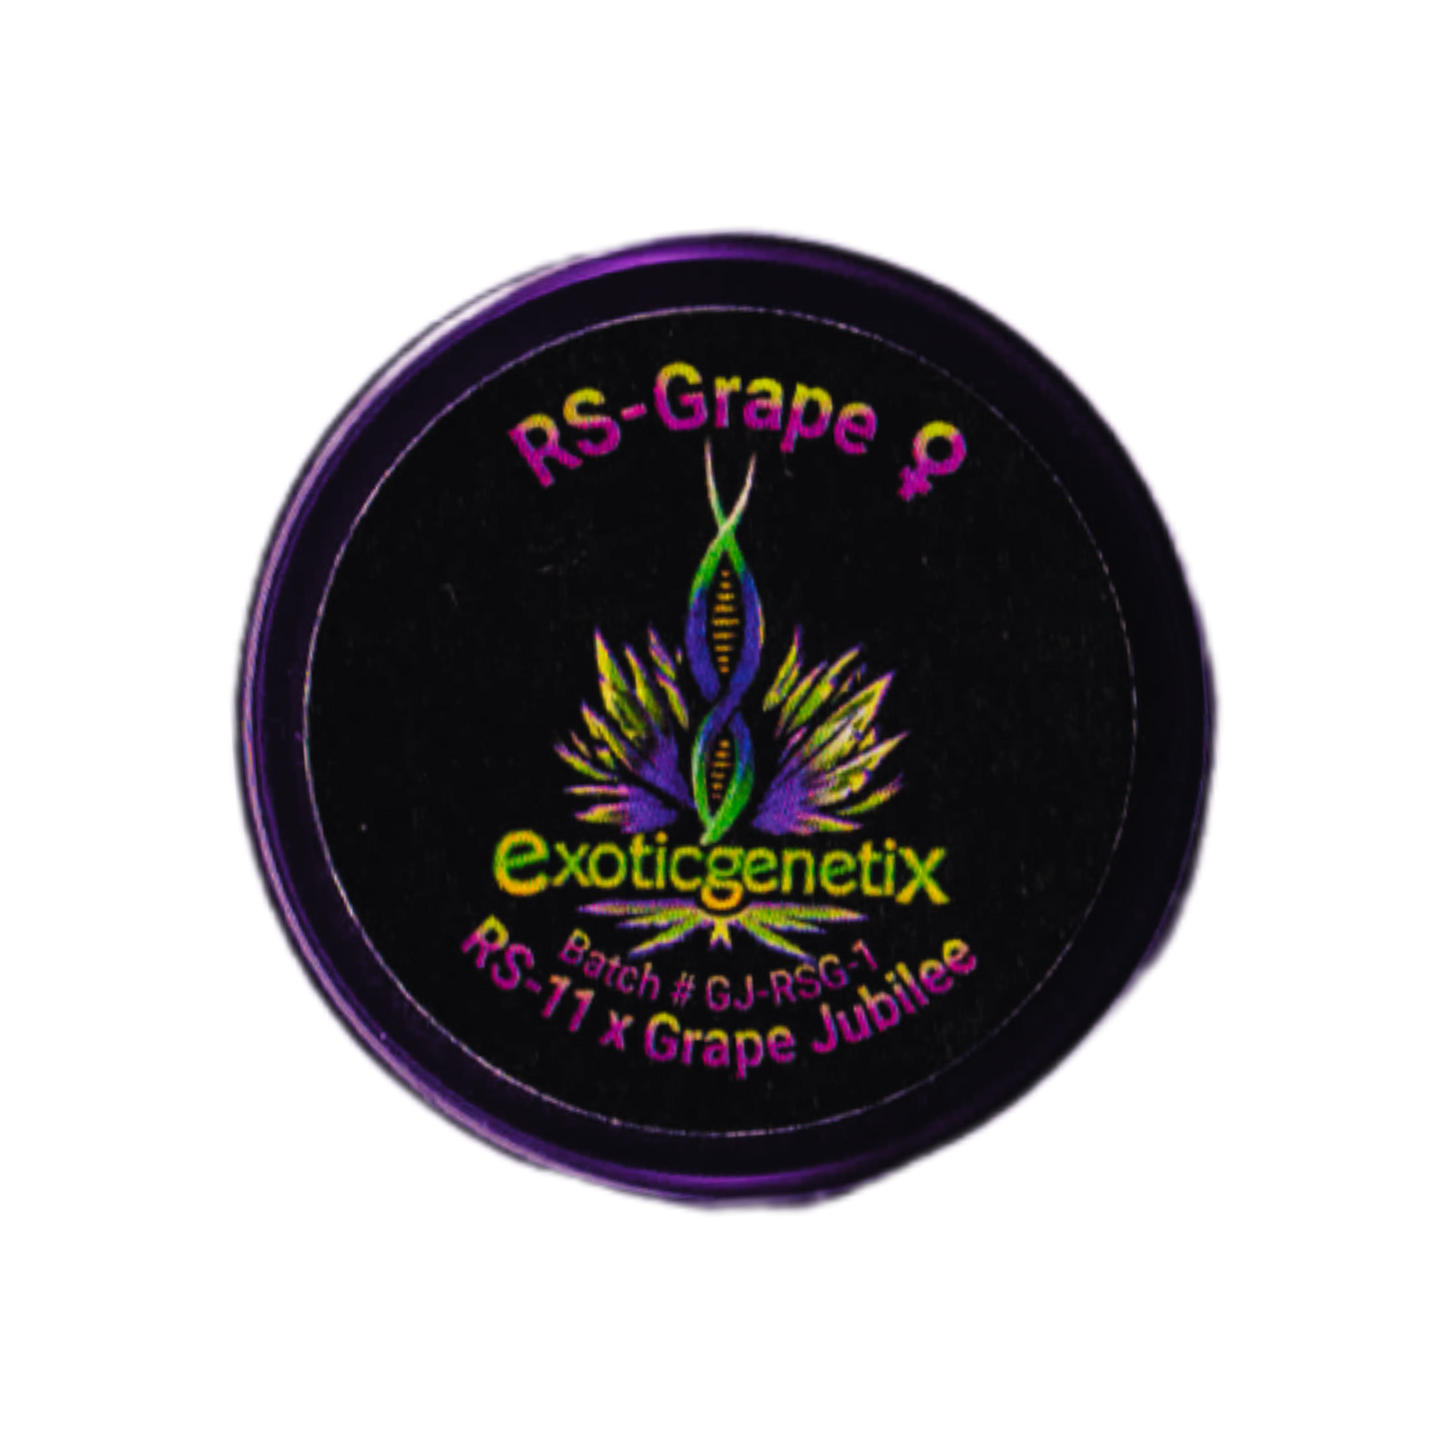 RS-GRAPE RS11 x Grape Jubilee EXOTIC GENETIX